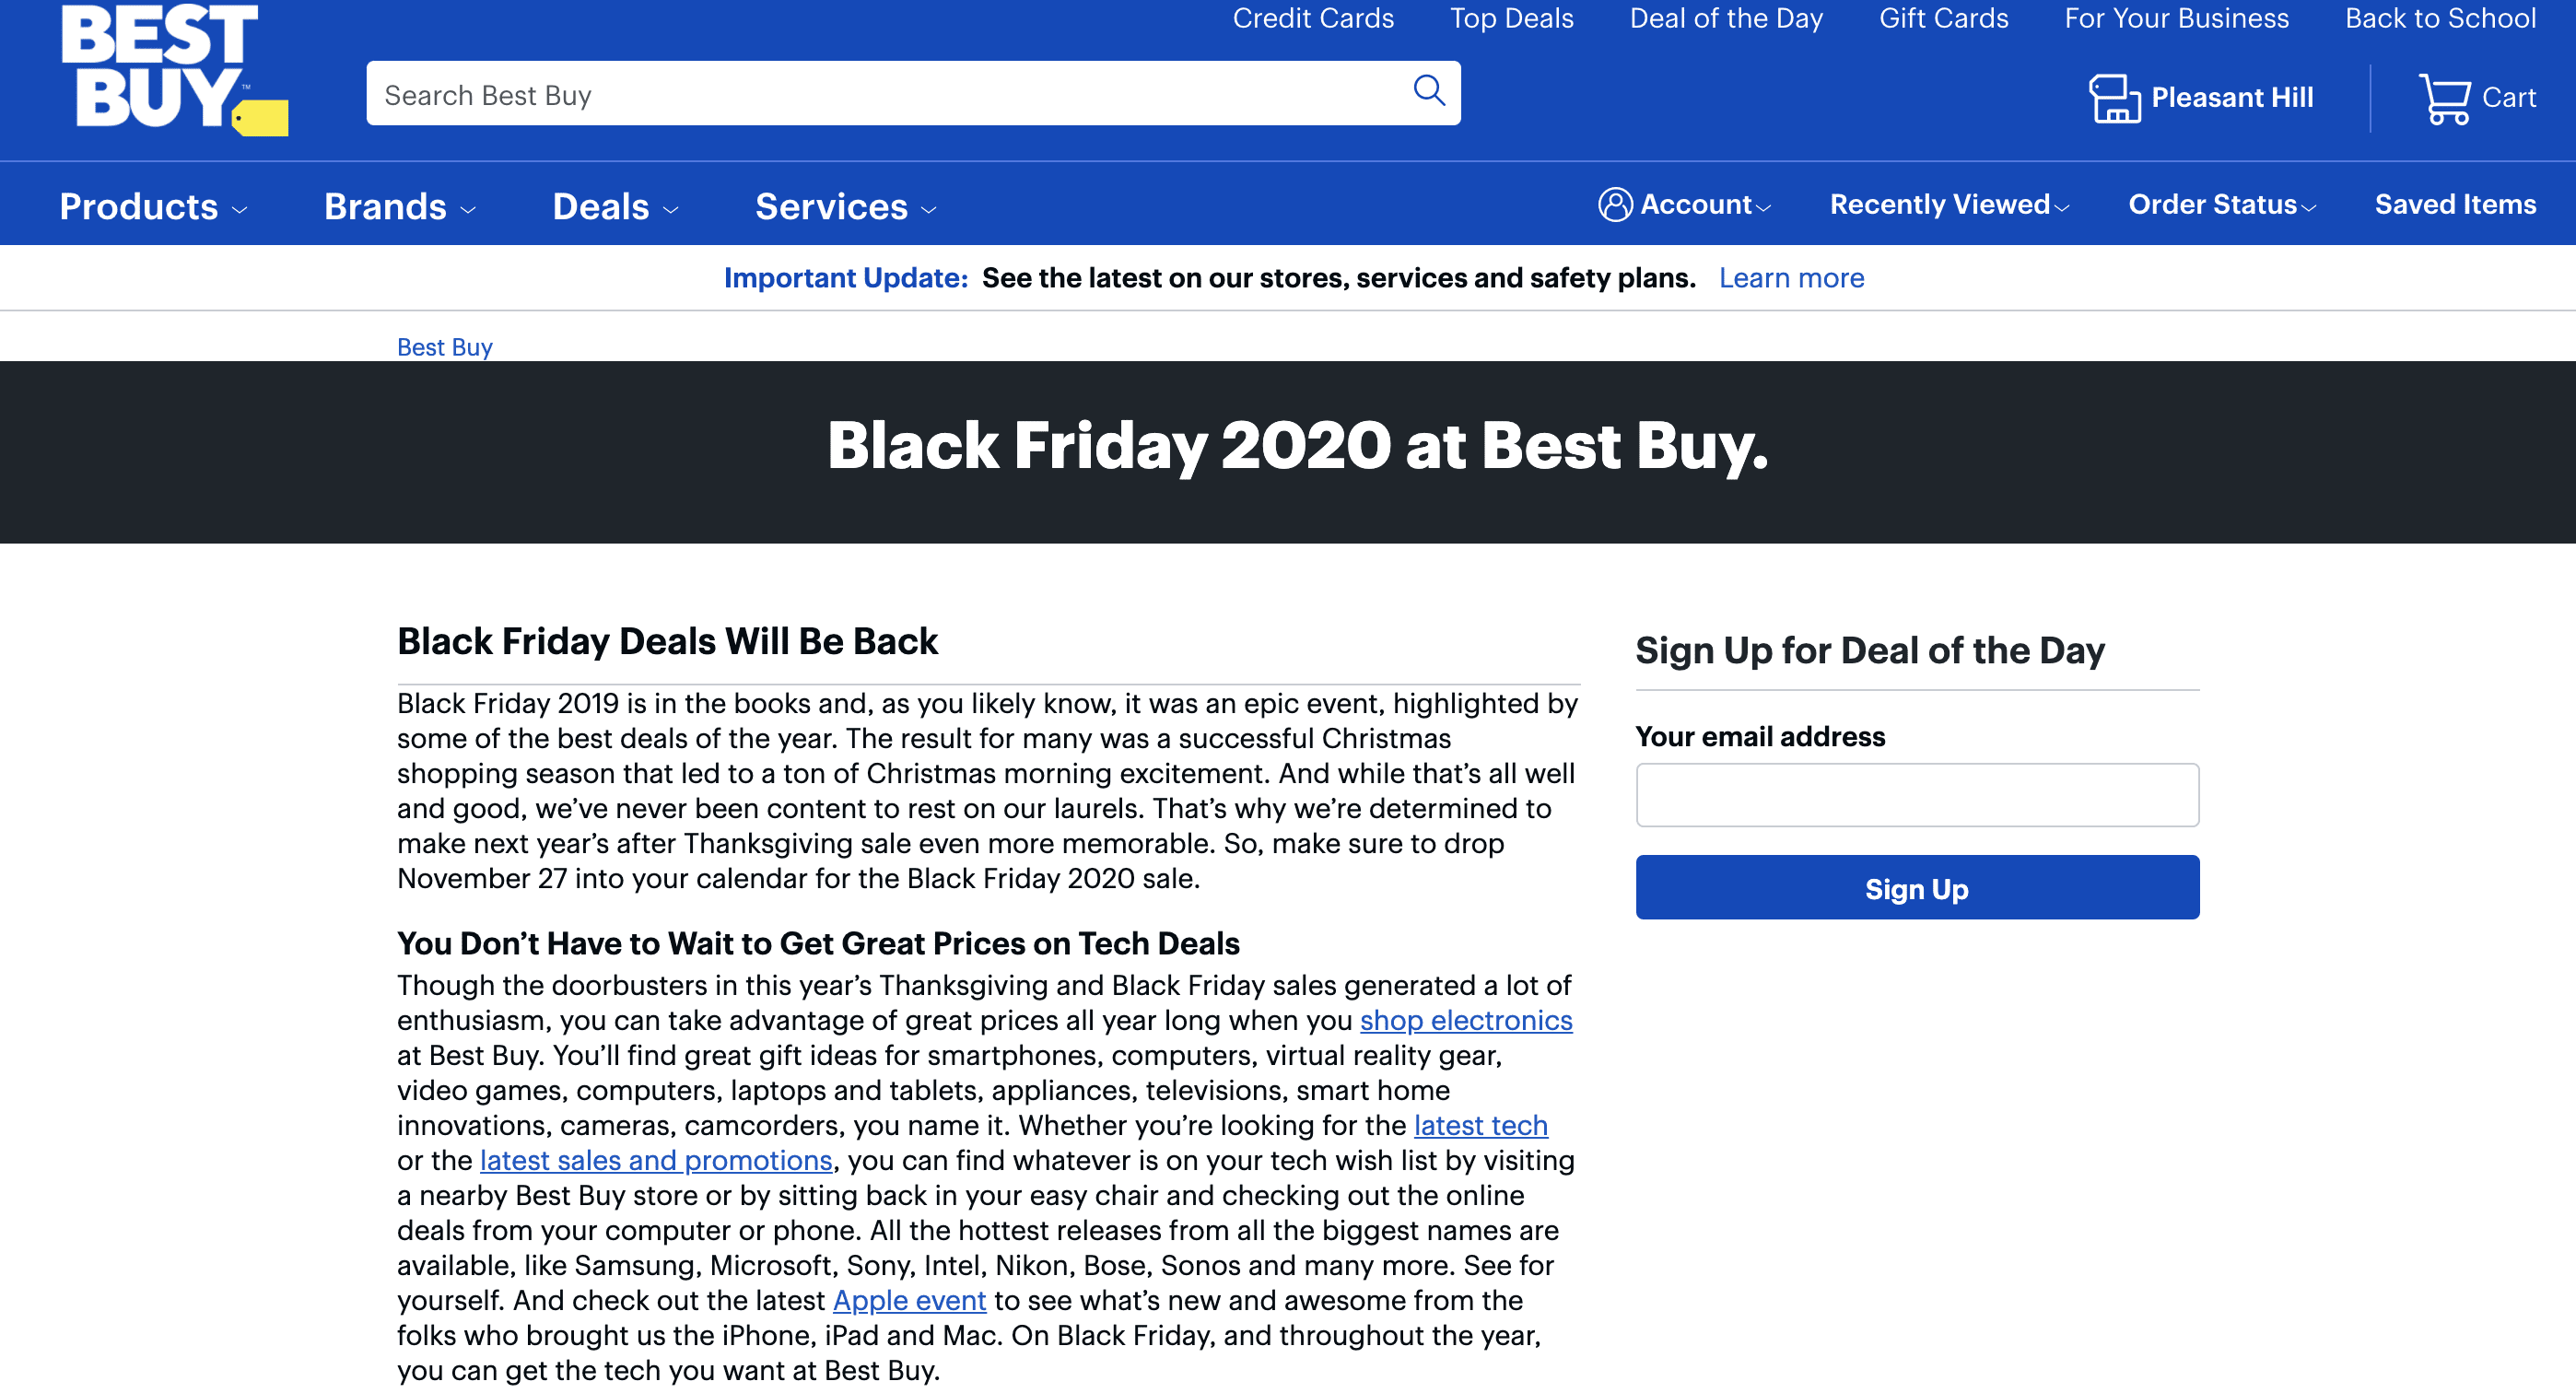 Best Buy's Black Friday messaging